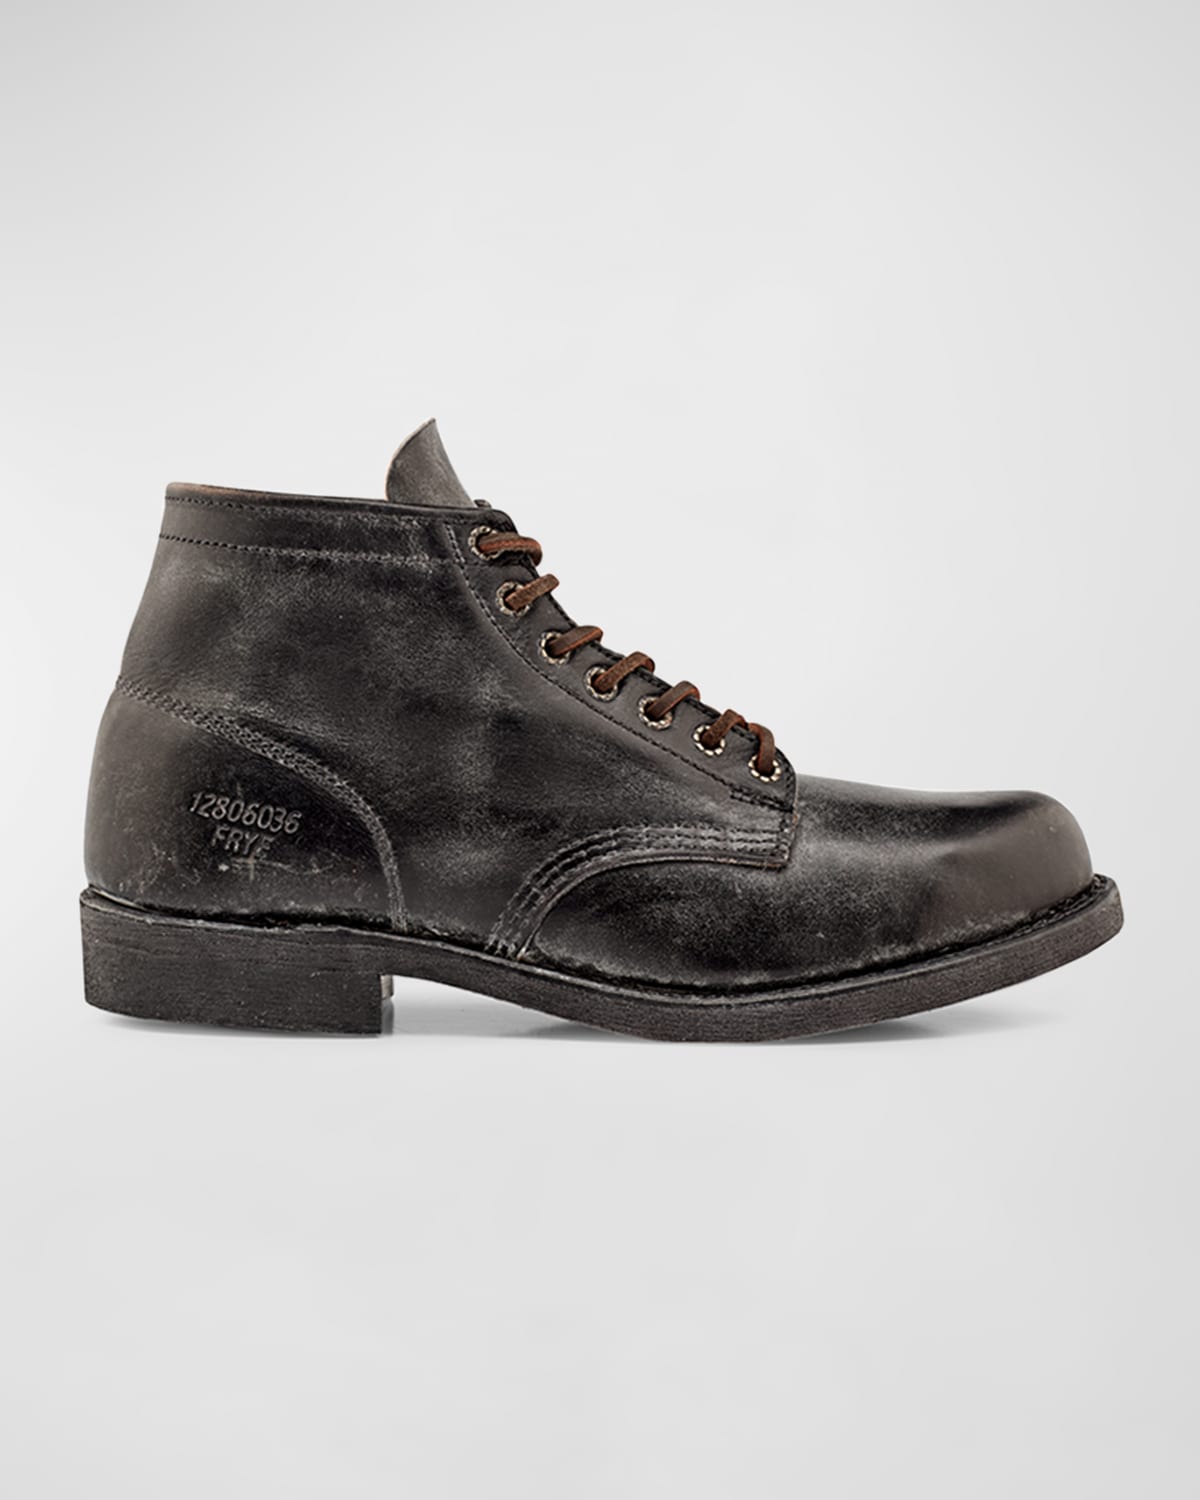 Men's Prison Lace-Up Leather Ankle Boots